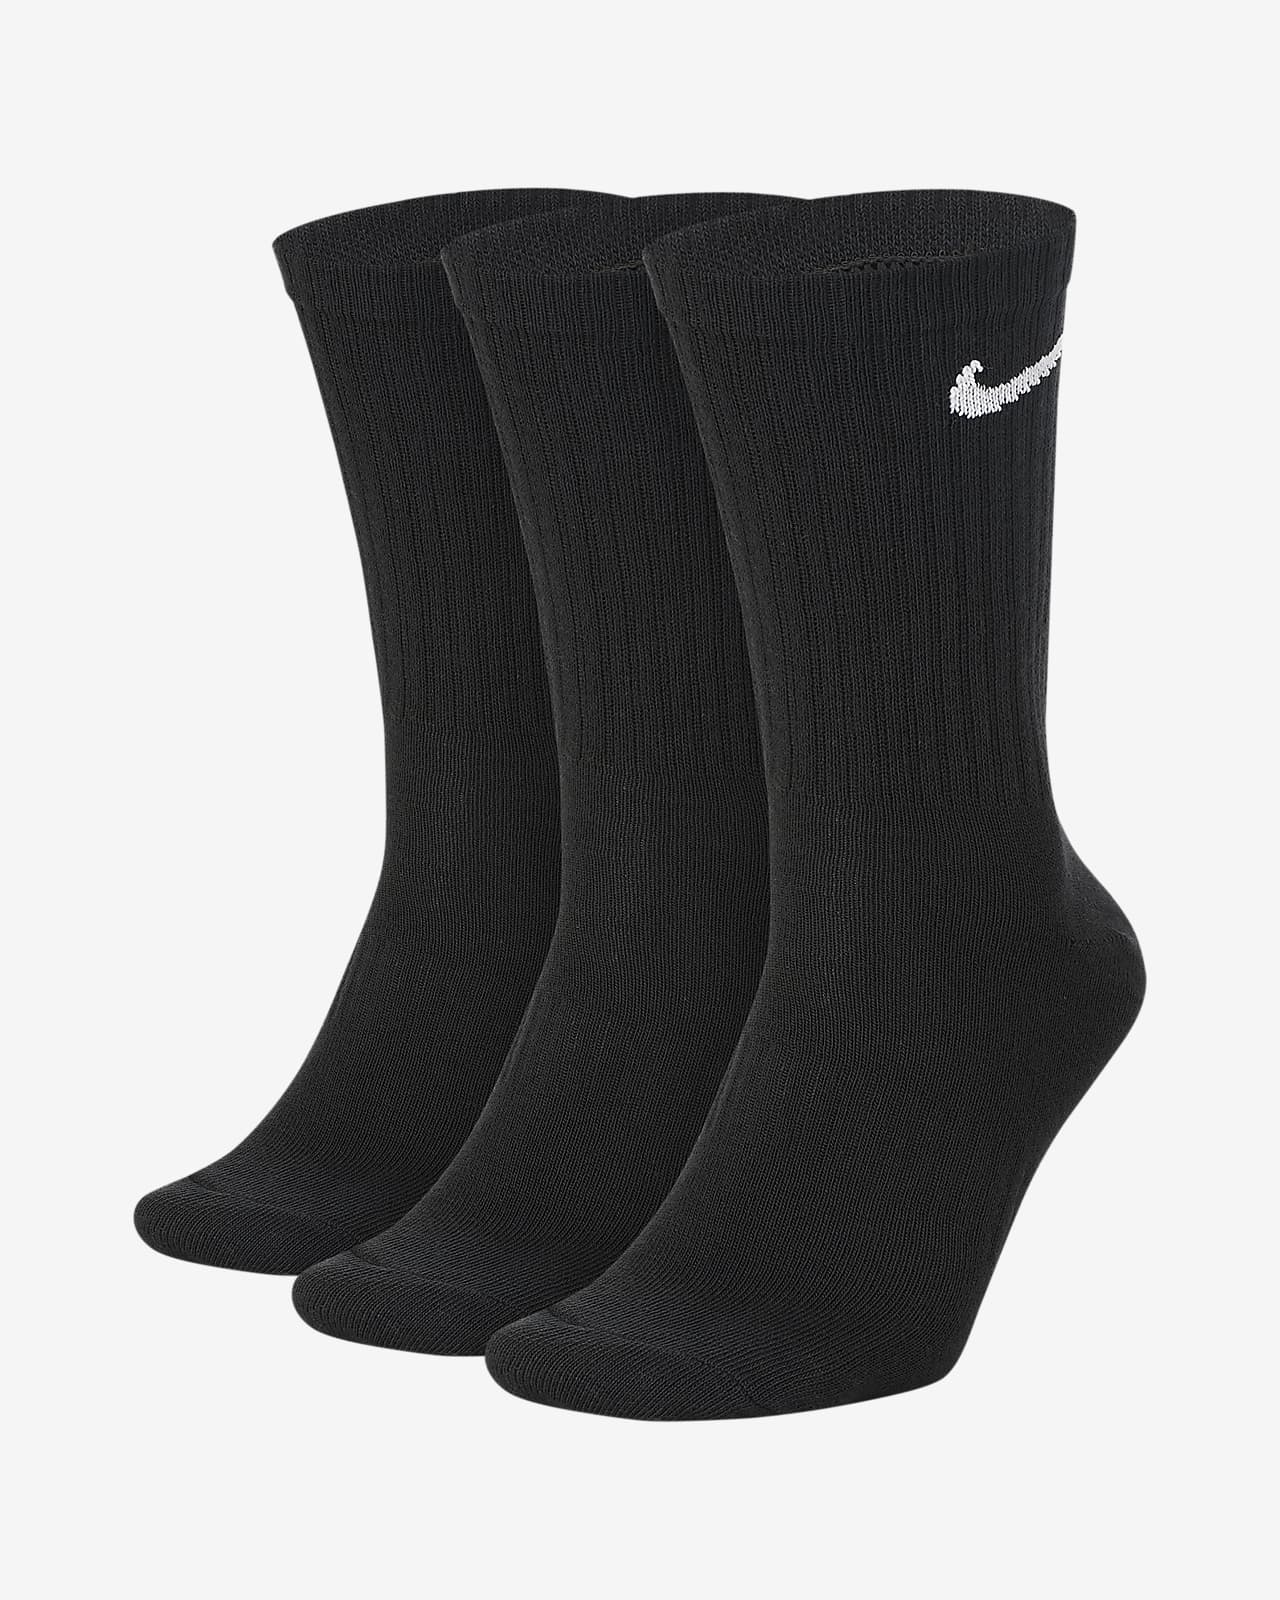 nike lightweight socks